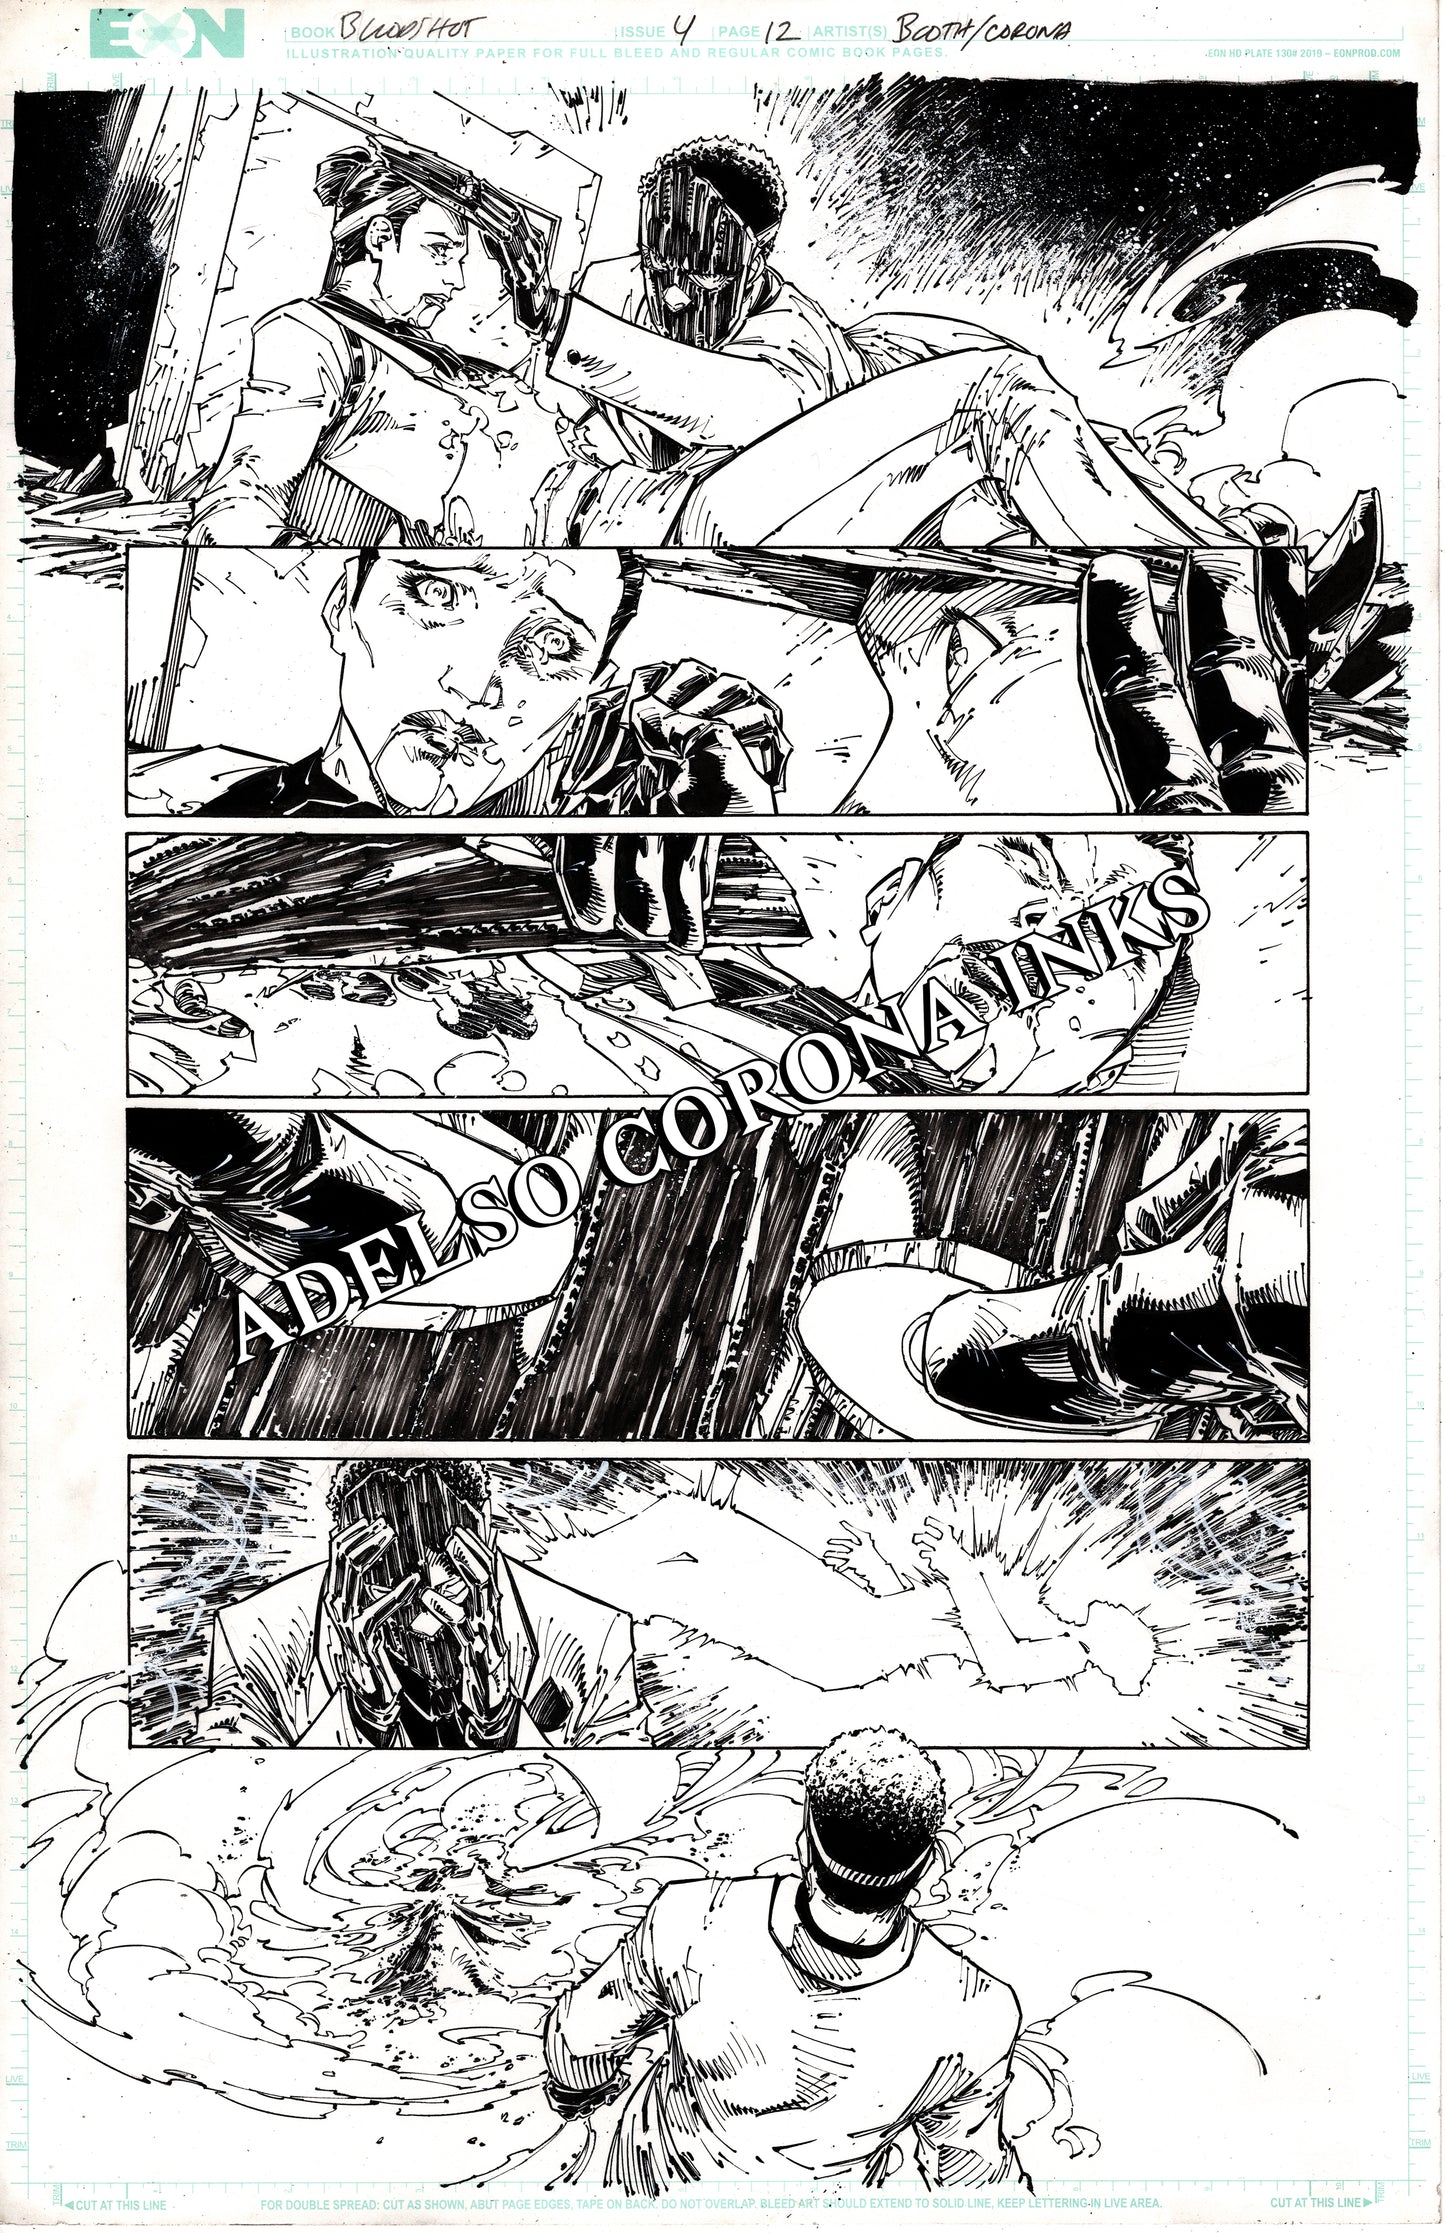 Bloodshot #4 Page12 Inks